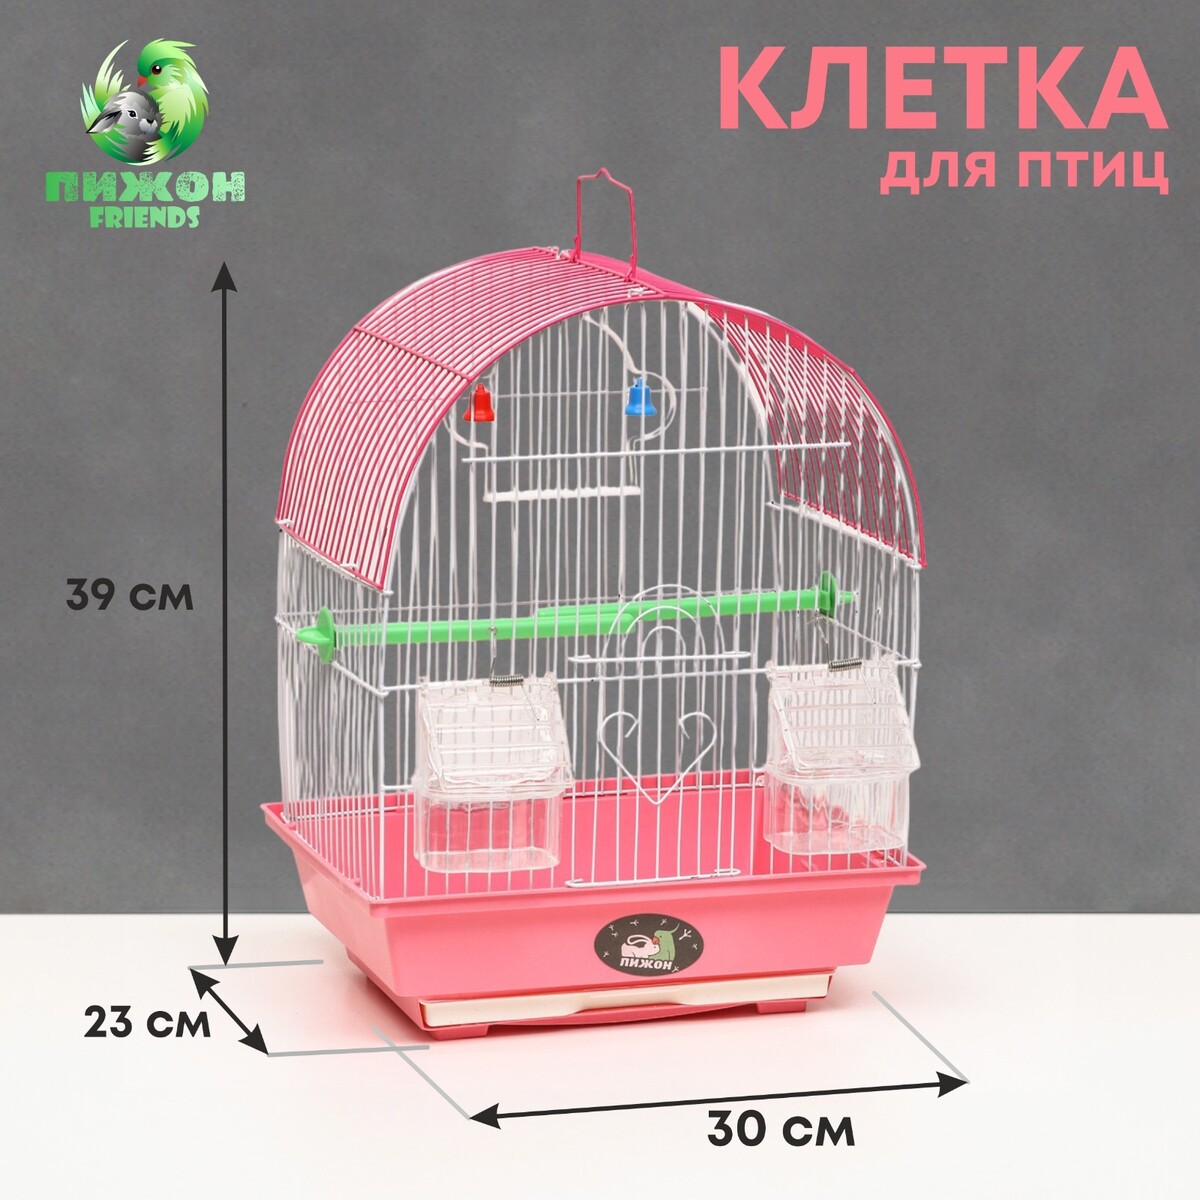 Клетка для птицукомплектованная bd-1/3c, 30 х 23 х 39 см, розовая клетка для птиц овальная с кормушками 30 х 23 х 39 см розовая